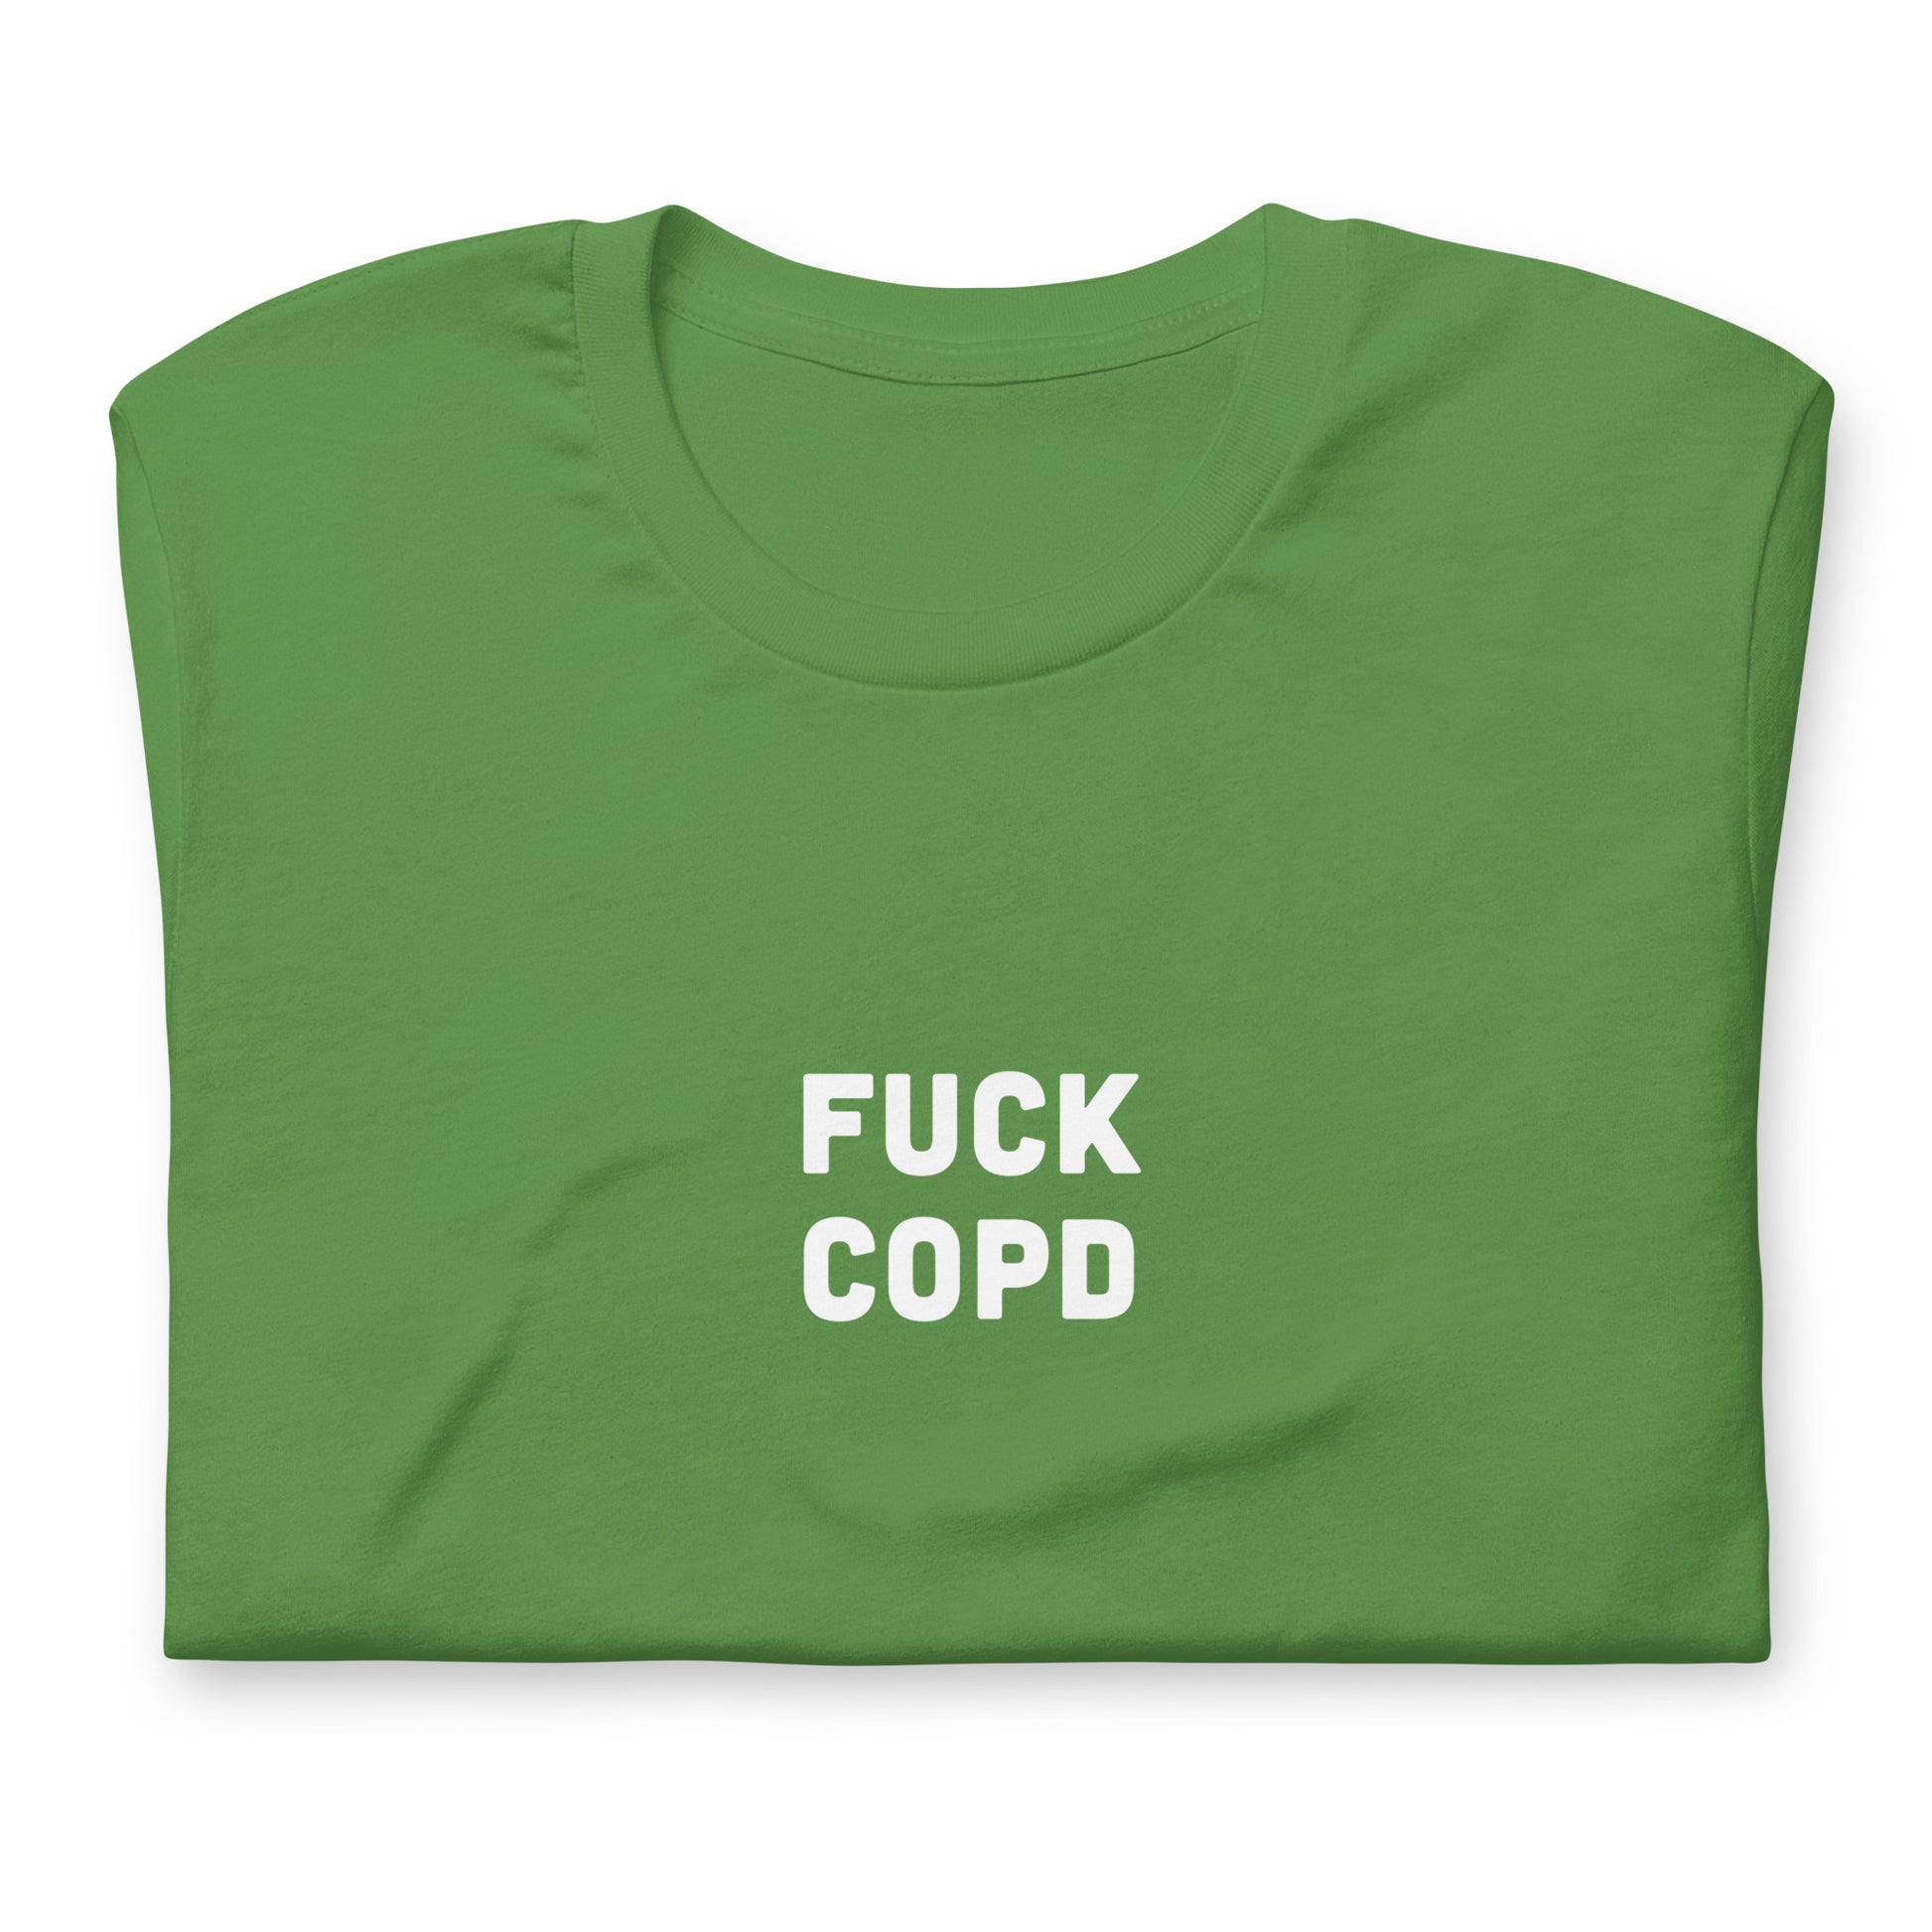 Fuck Copd T-Shirt Size 2XL Color Navy